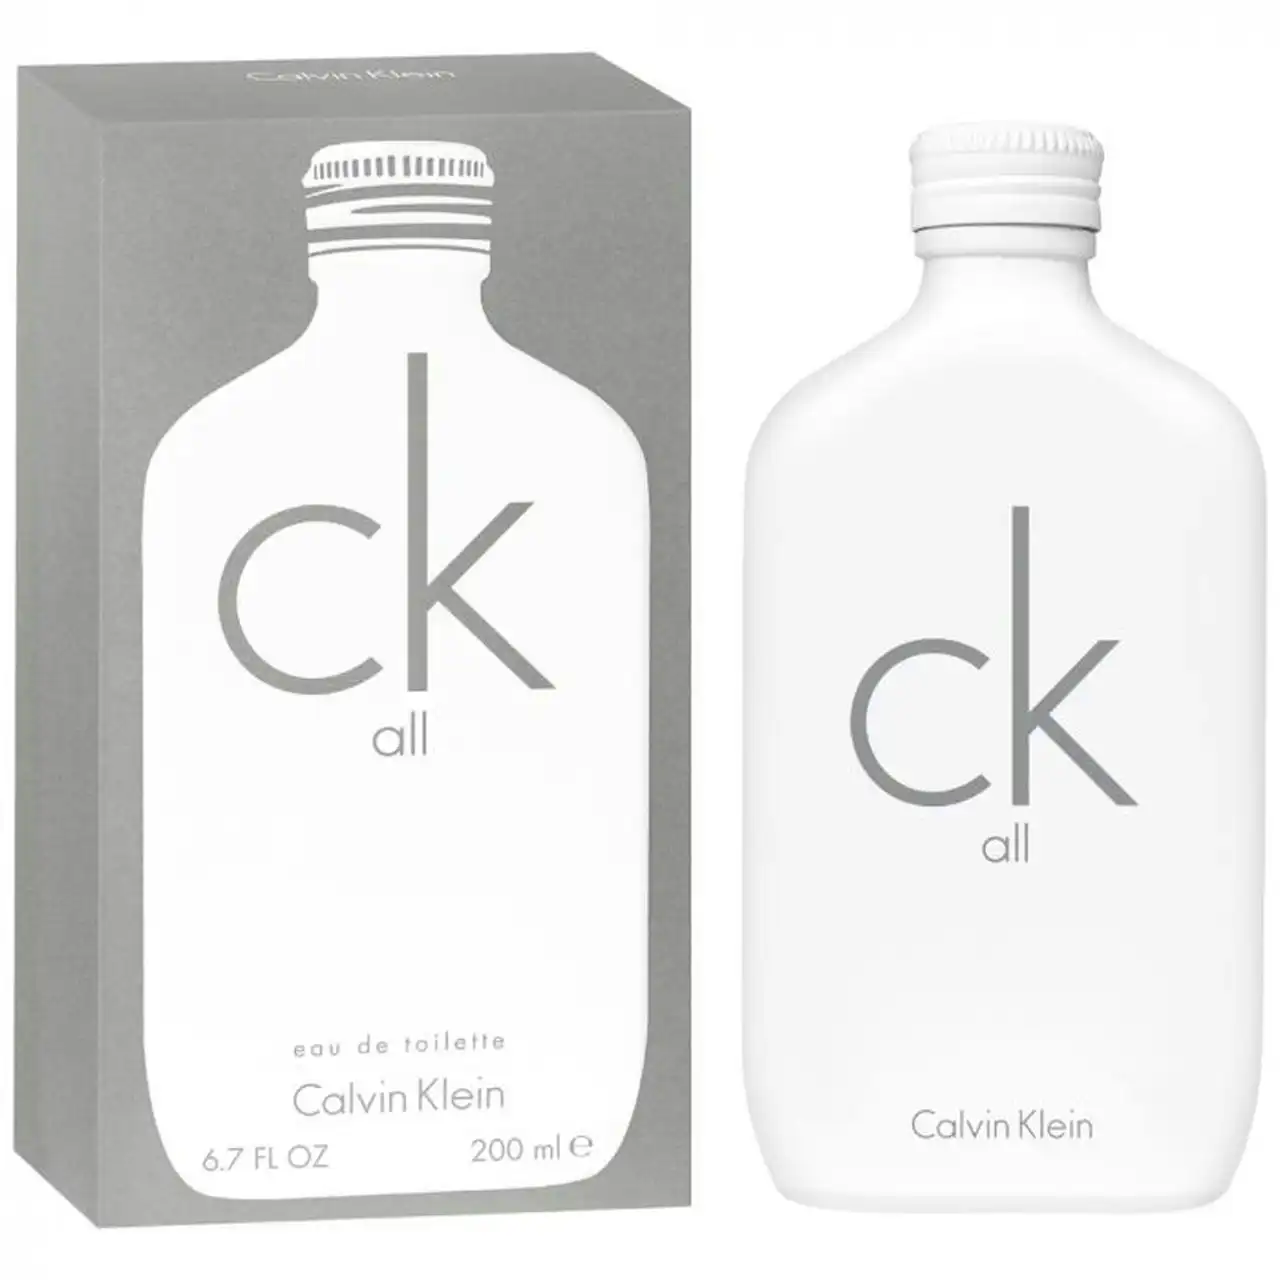 Calvin Klein Ck All 200ml Eau de Toilette